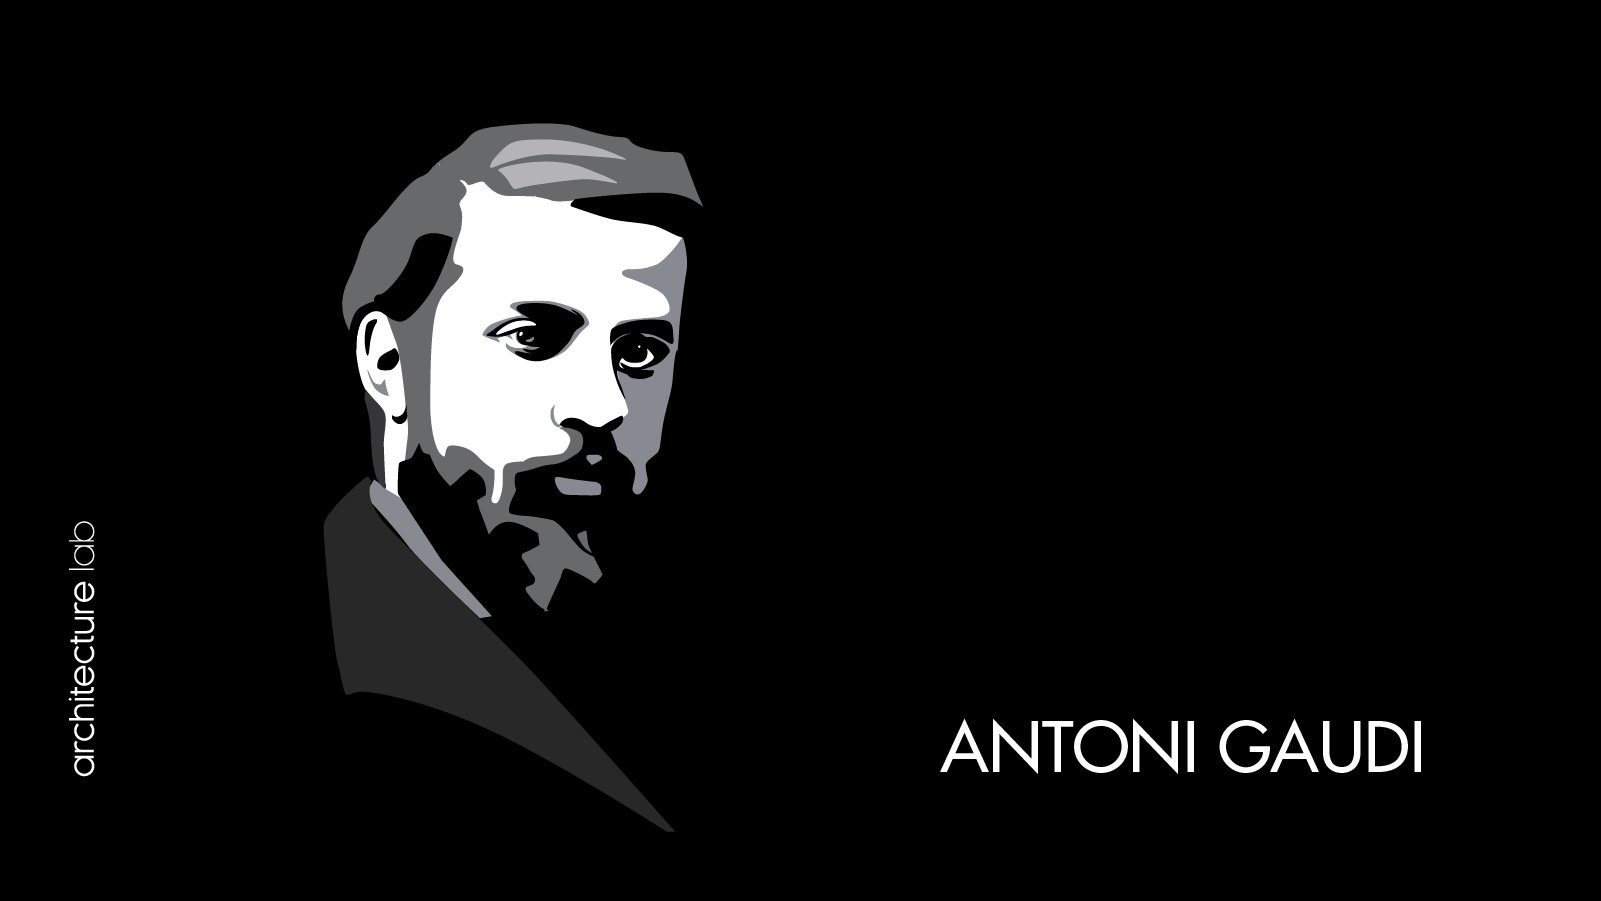 Antoni gaudi: biography, works, awards